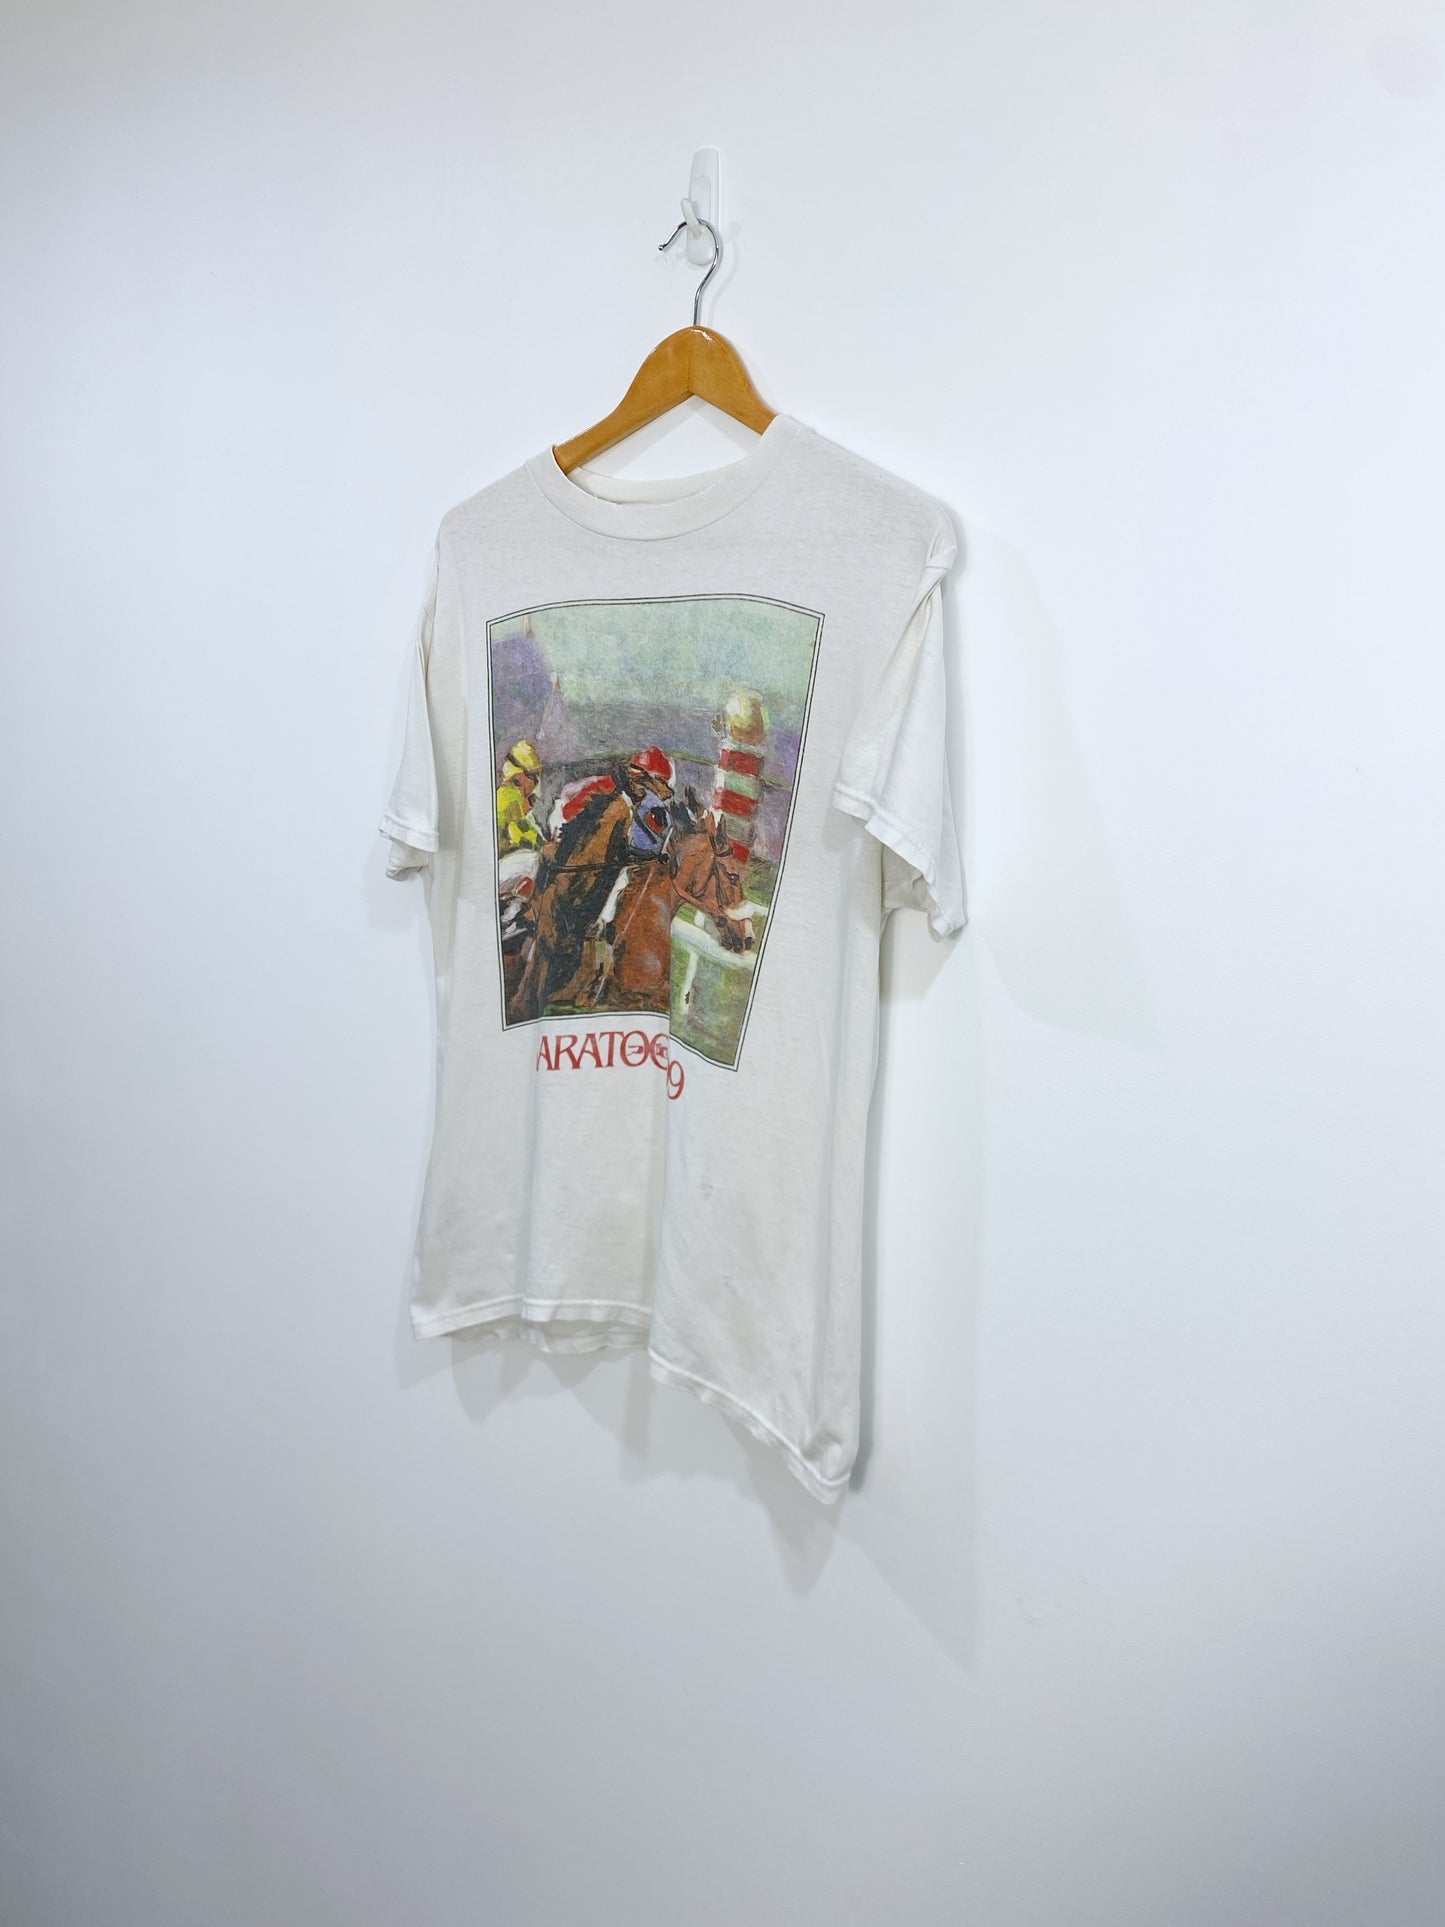 Vintage 1999 Saratoga T-shirt M